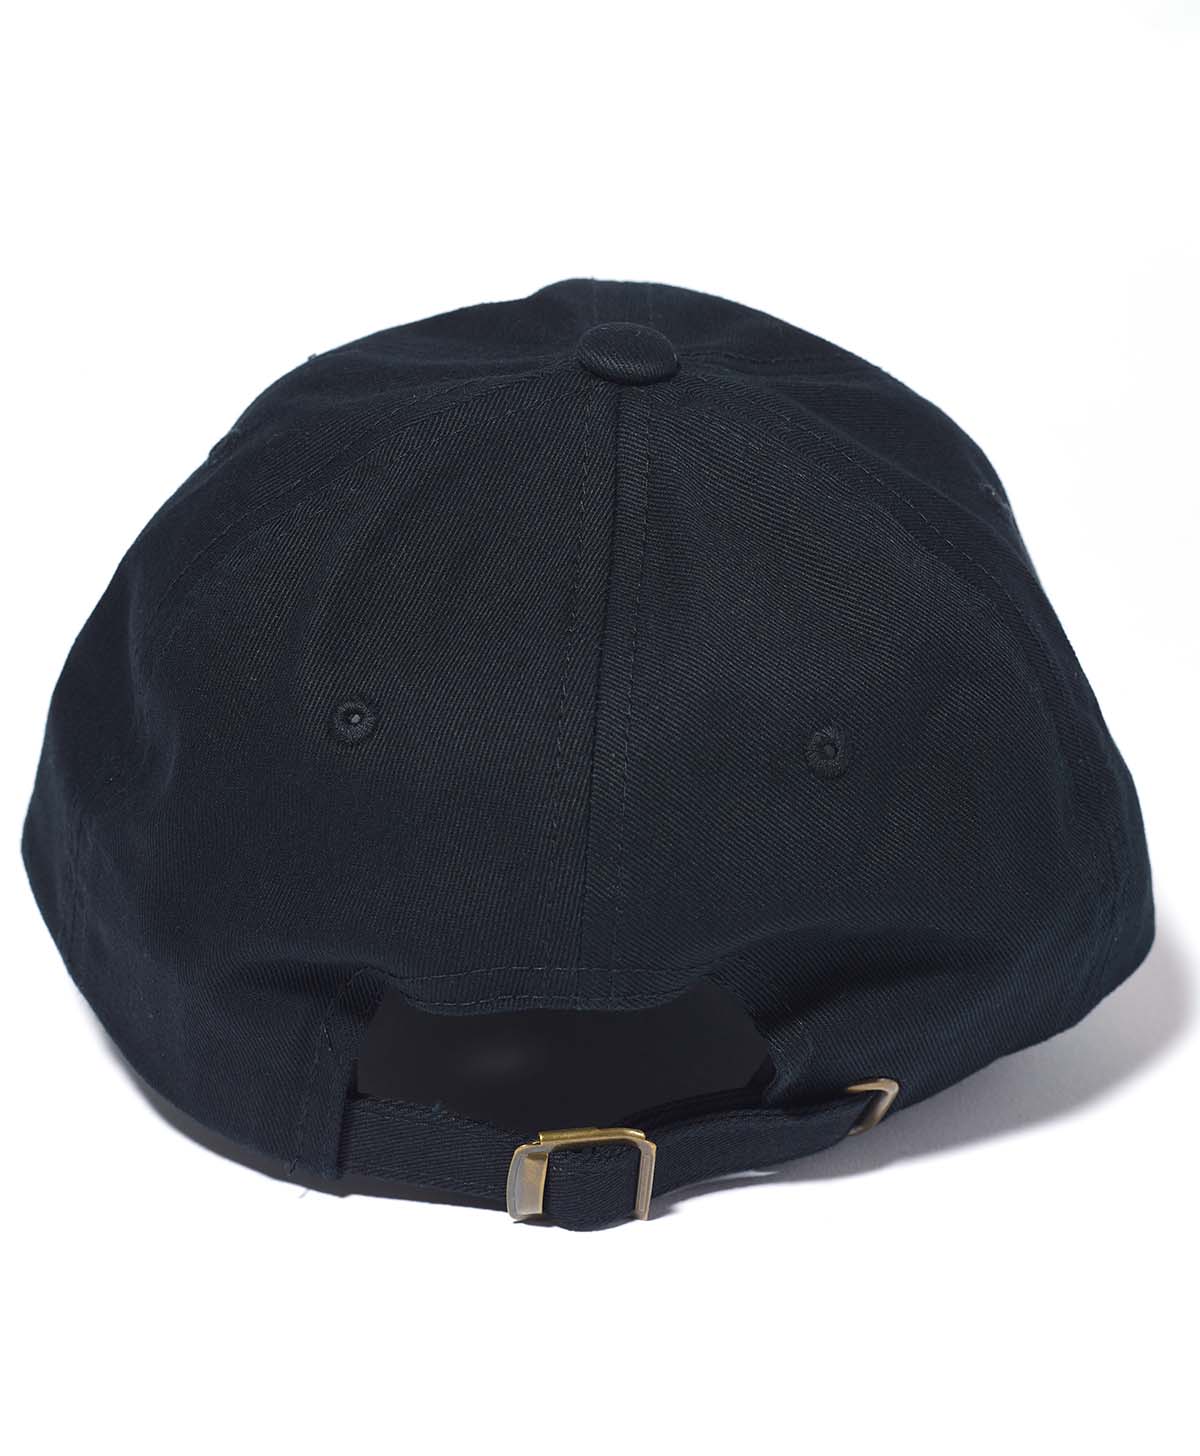 KADOYA قبعة الأب / أسود